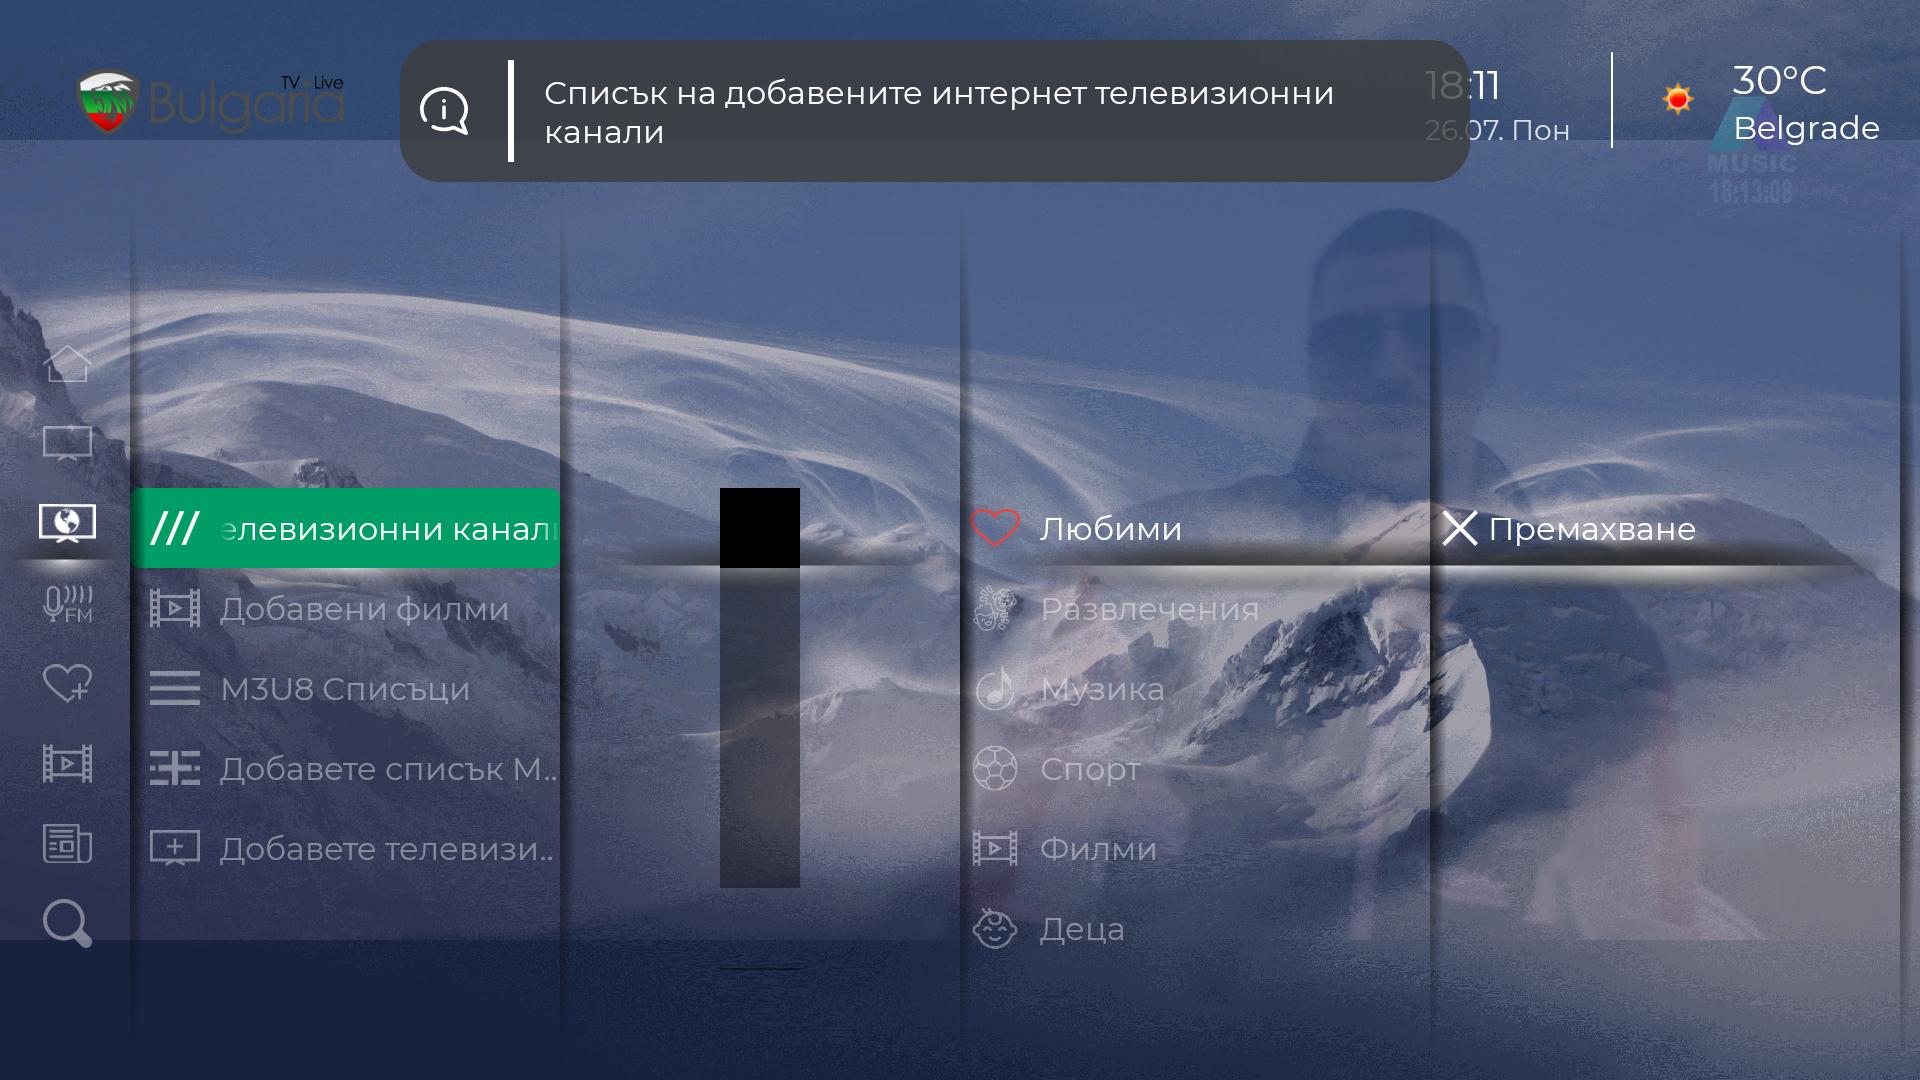 Bulgaria Live 1.2.04 Screenshot 12